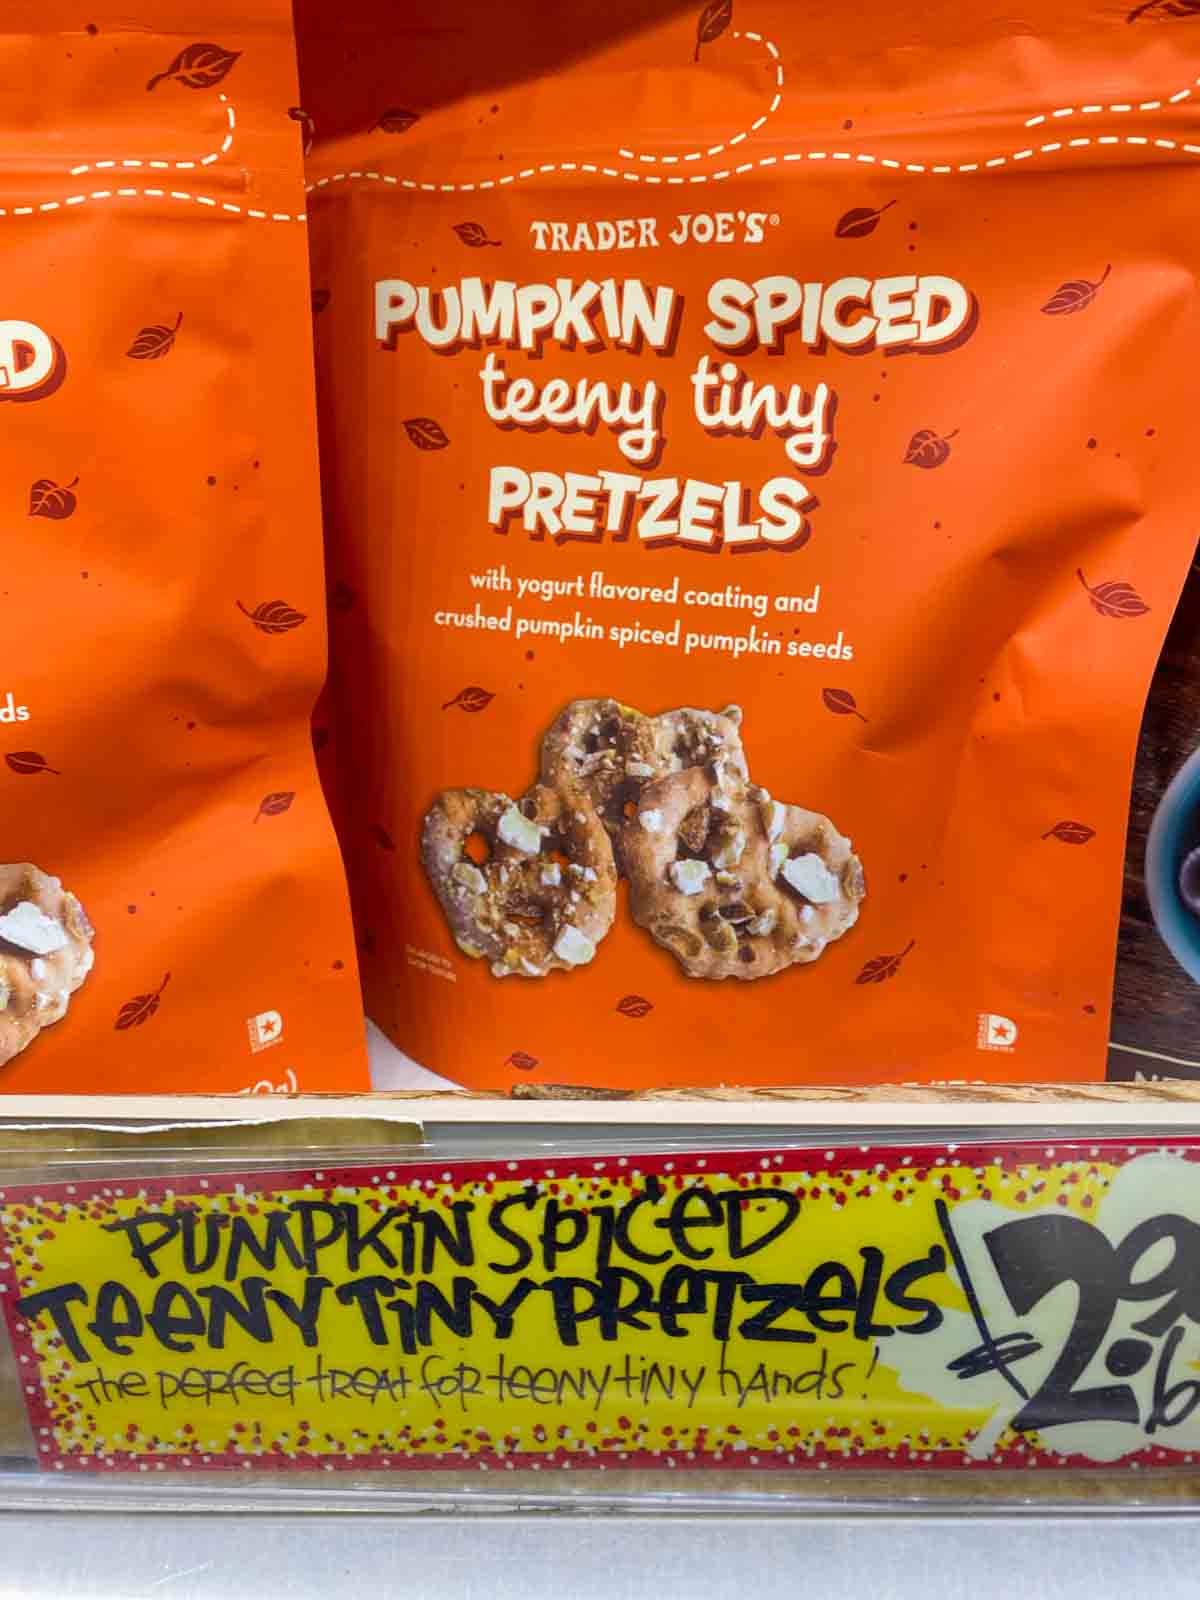 Trader Joe's Pumpkin Spiced teeny tiny pretzels on shelf